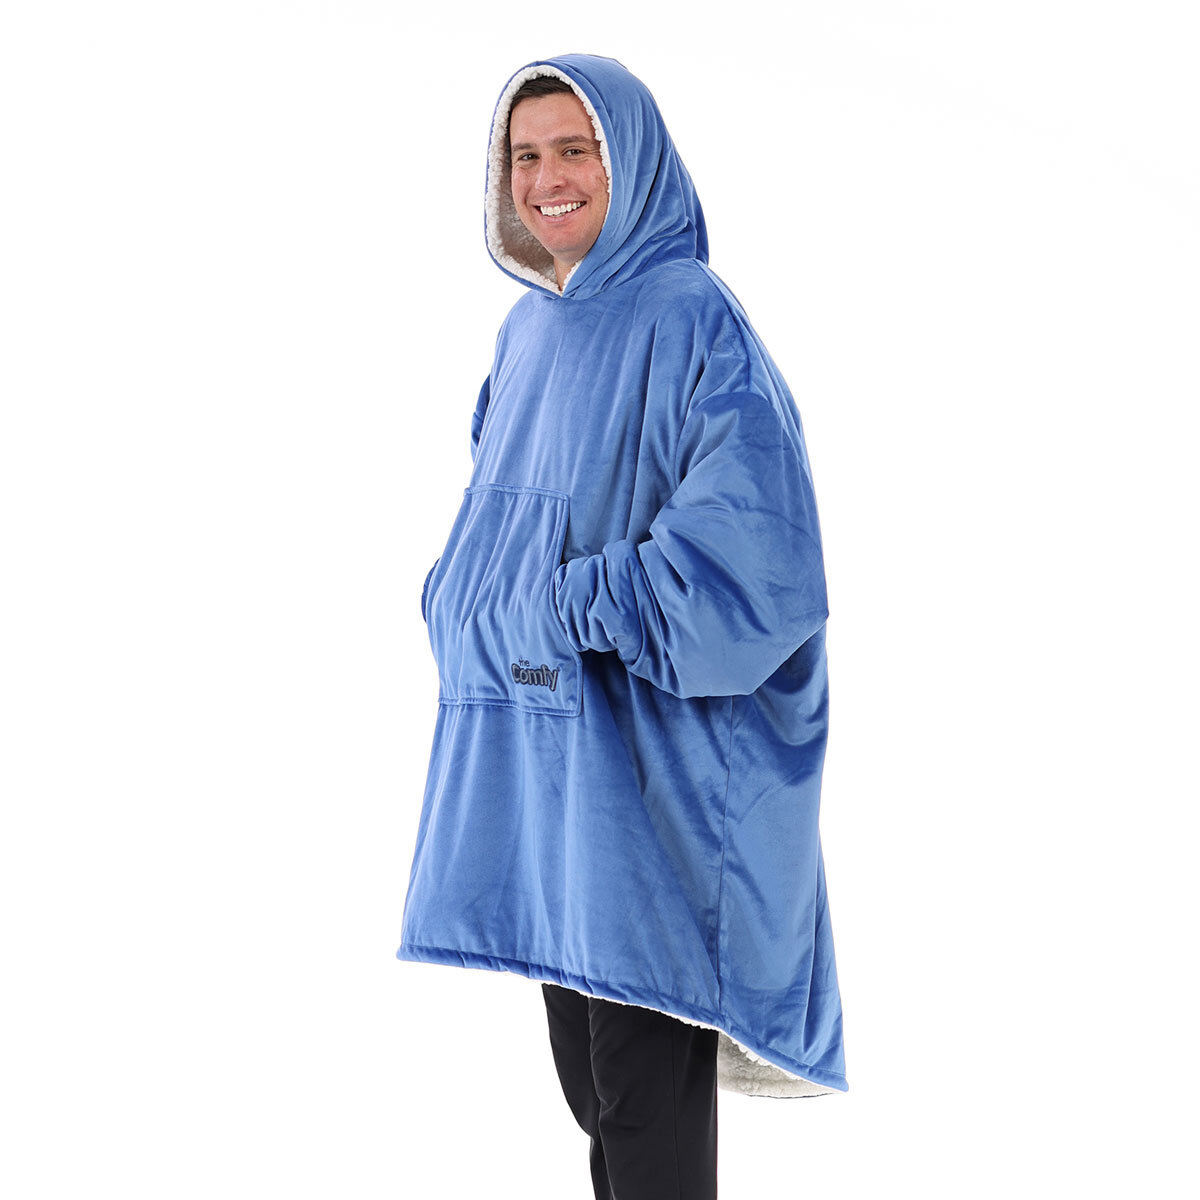 The Comfy Original Wearable Blanket in Blue | Costco UK